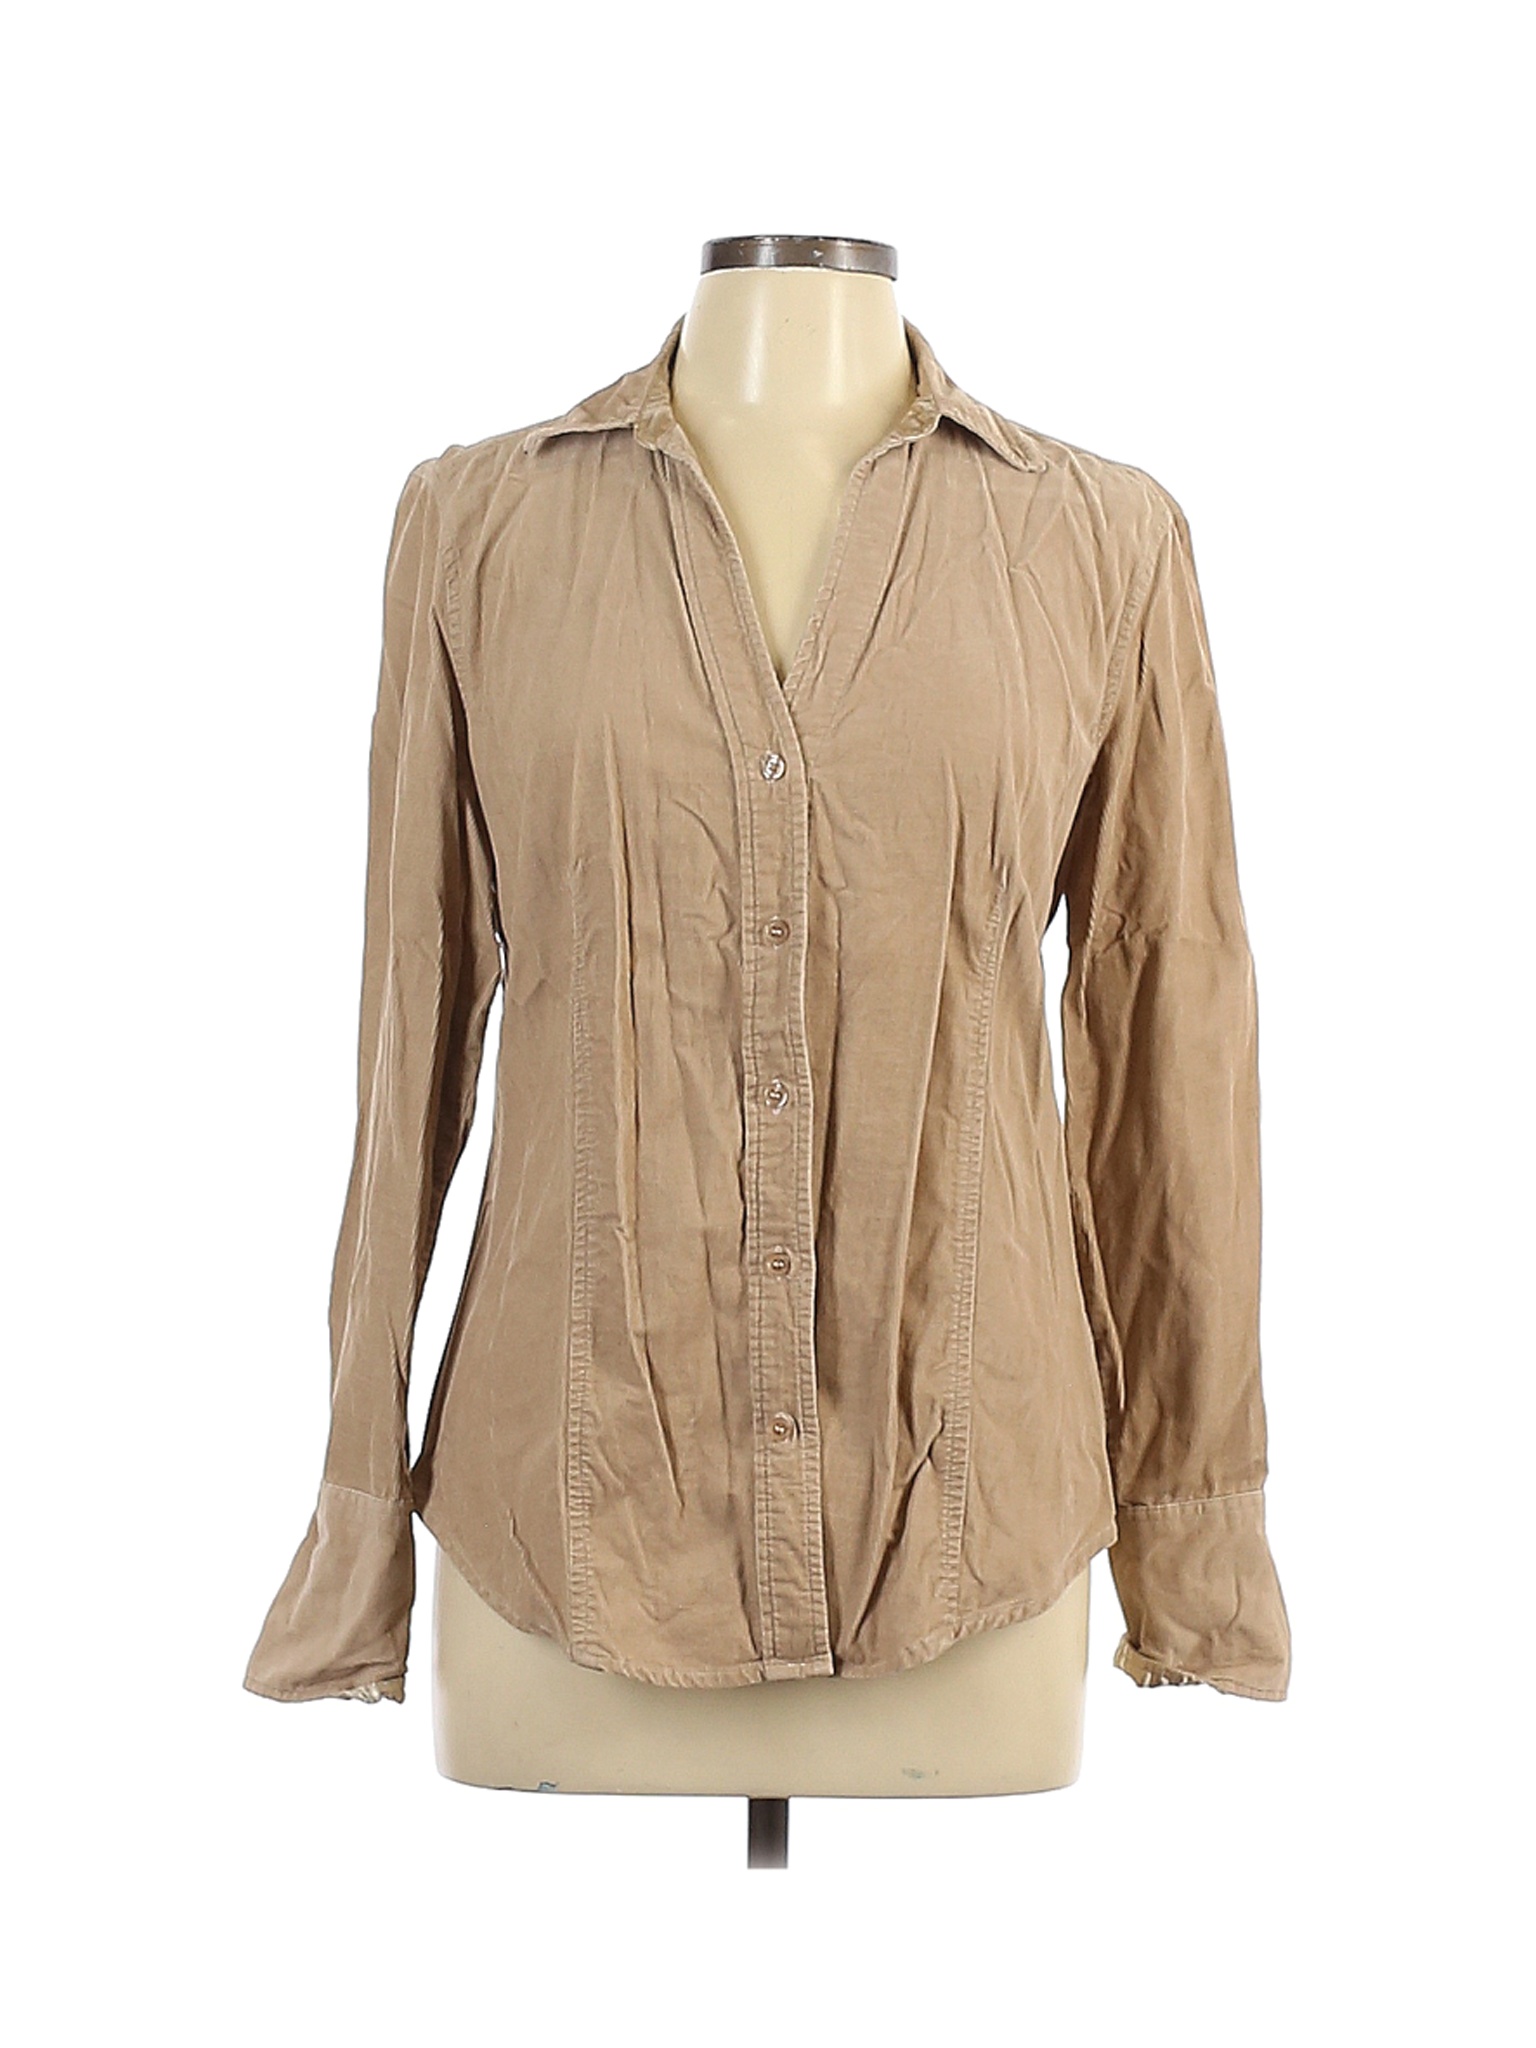 St. John's Bay Women Brown Long Sleeve Button-Down Shirt L | eBay